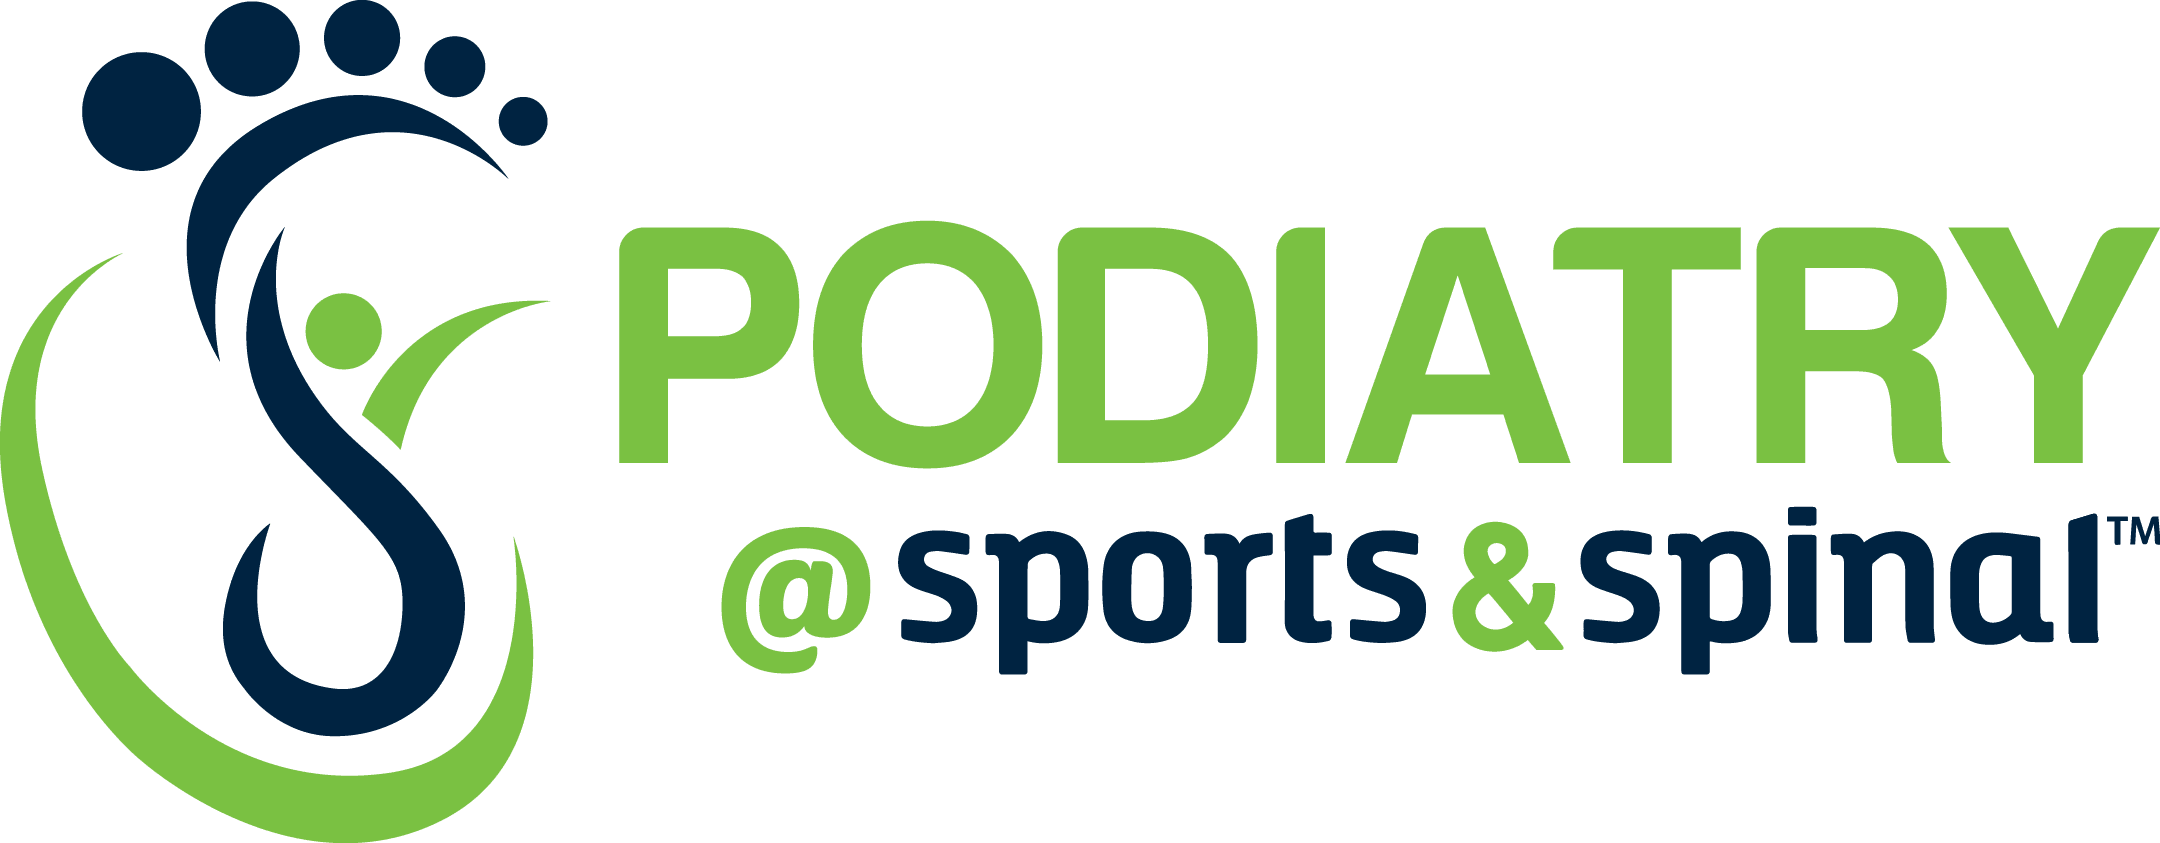 Podiatry @ Sports & Spinal Logo